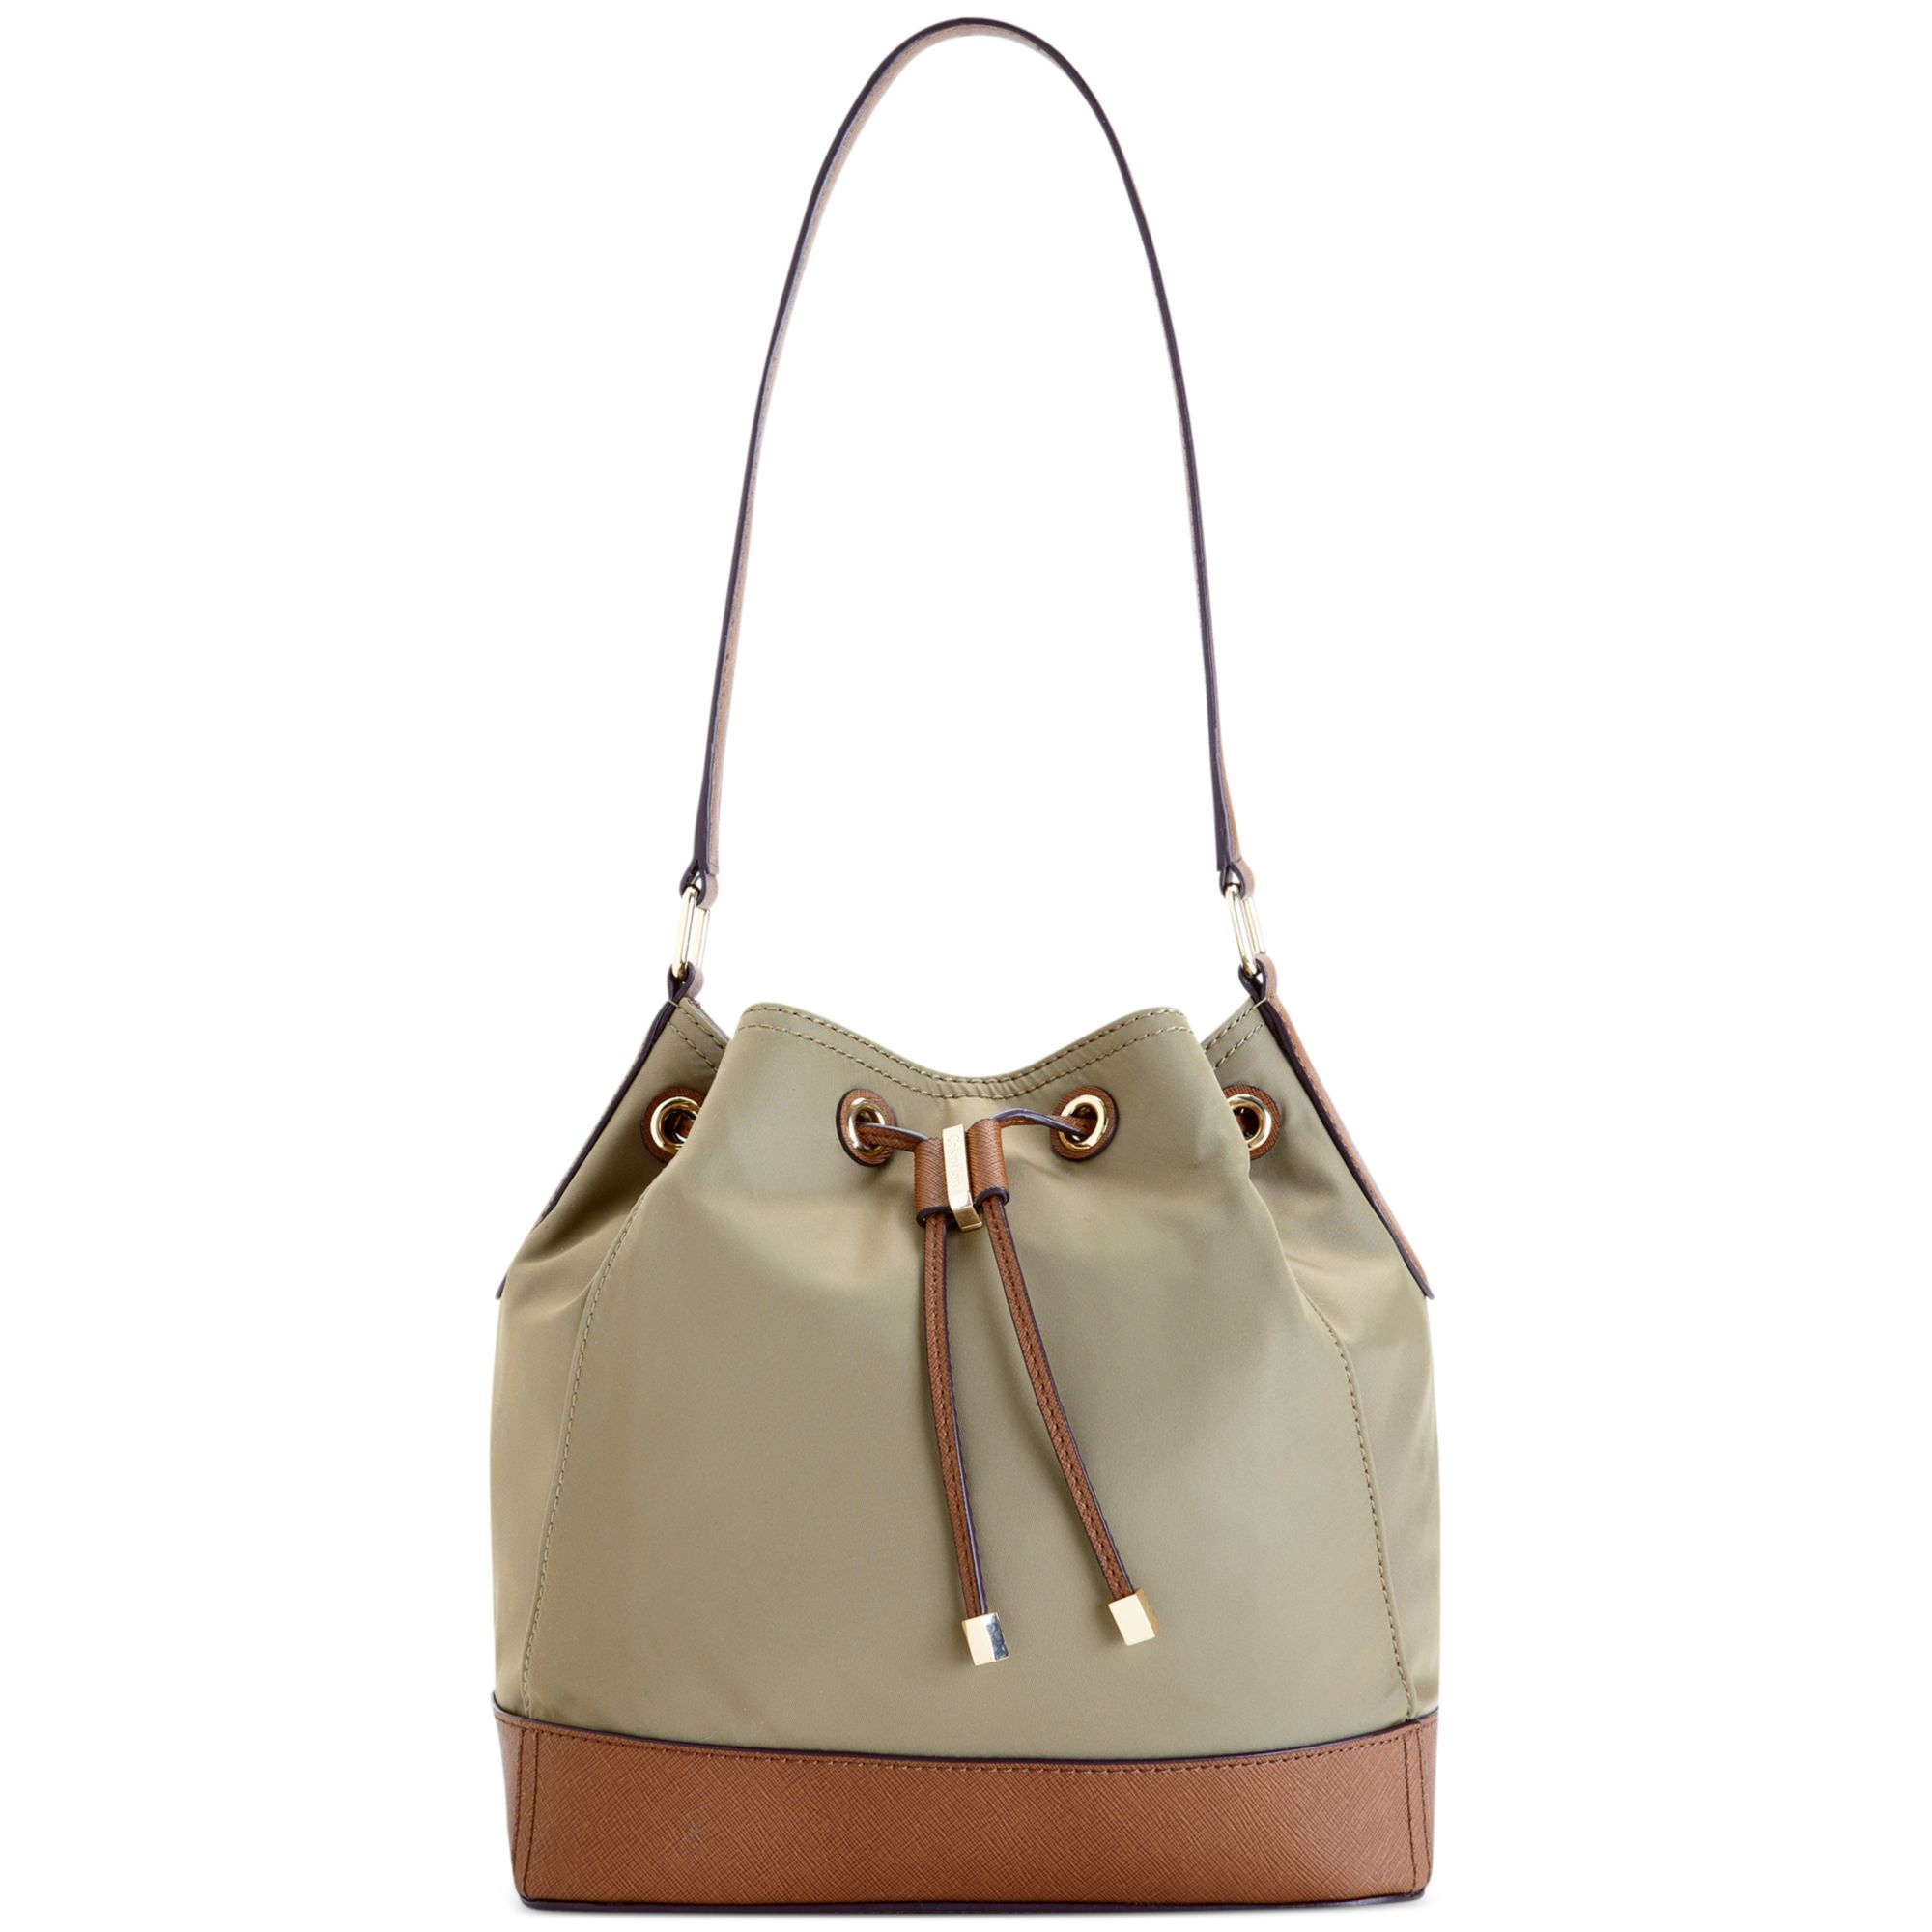 Lyst - Calvin Klein Key Item Drawstring Bucket Bag in Natural